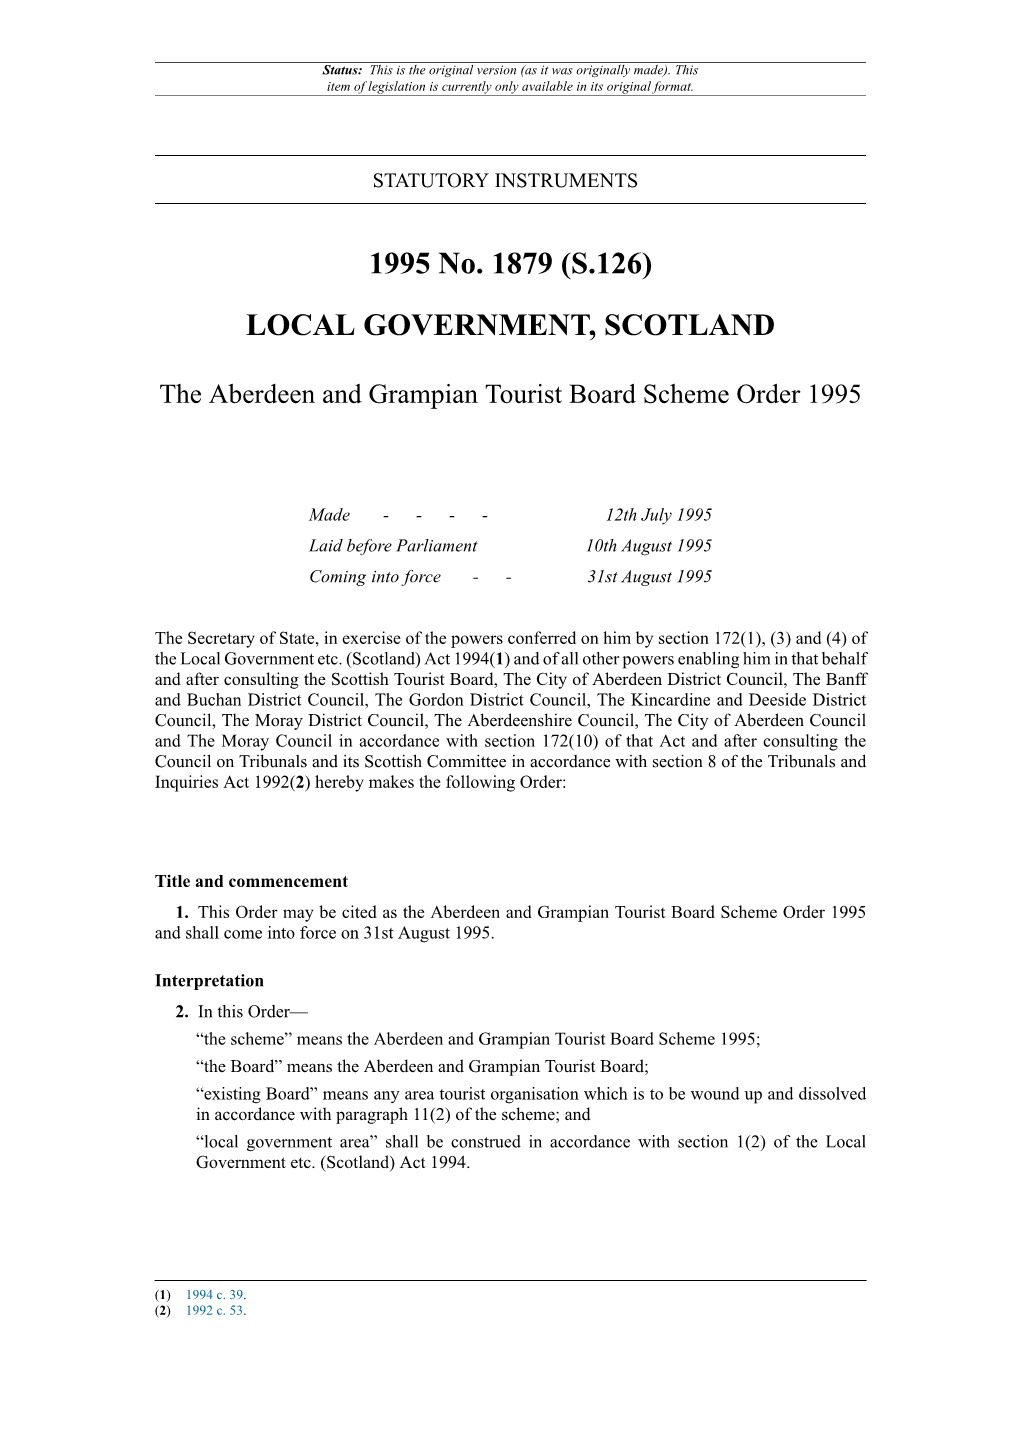 The Aberdeen and Grampian Tourist Board Scheme Order 1995